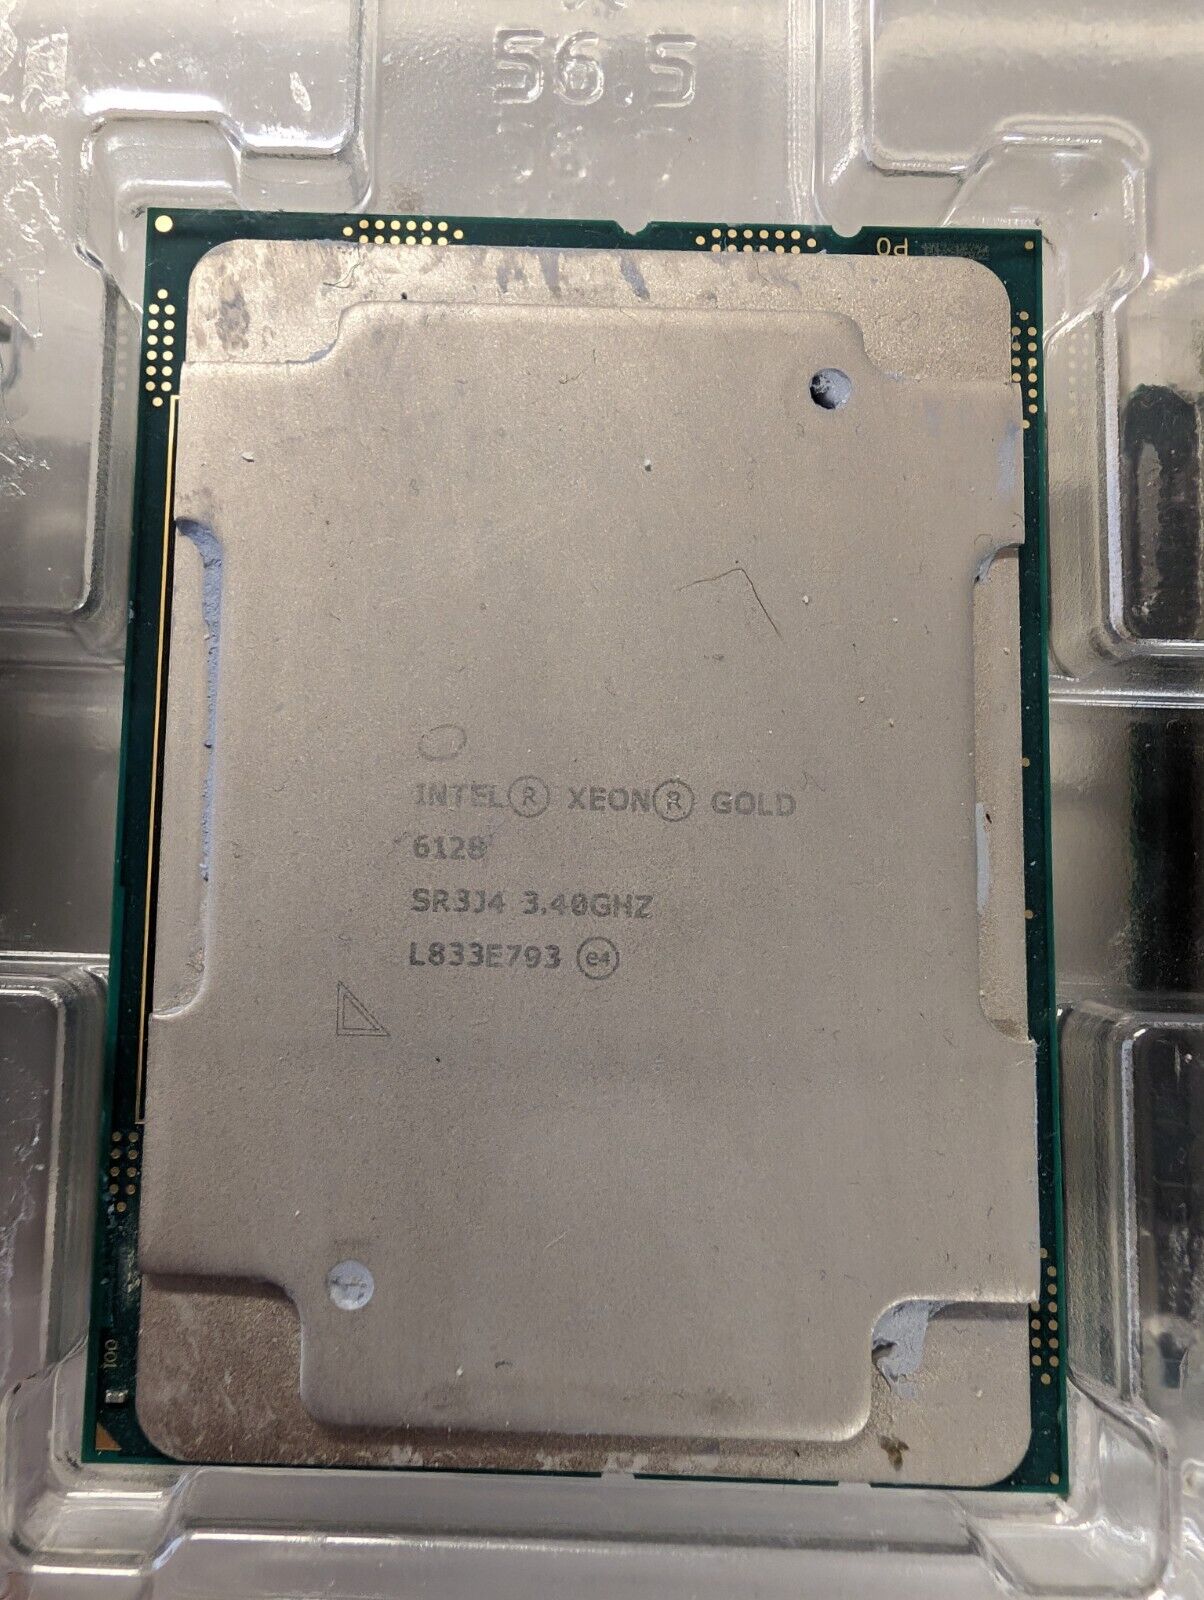 Intel Gold 6128 3.4 GHz Six Core (BX806736128) Processor